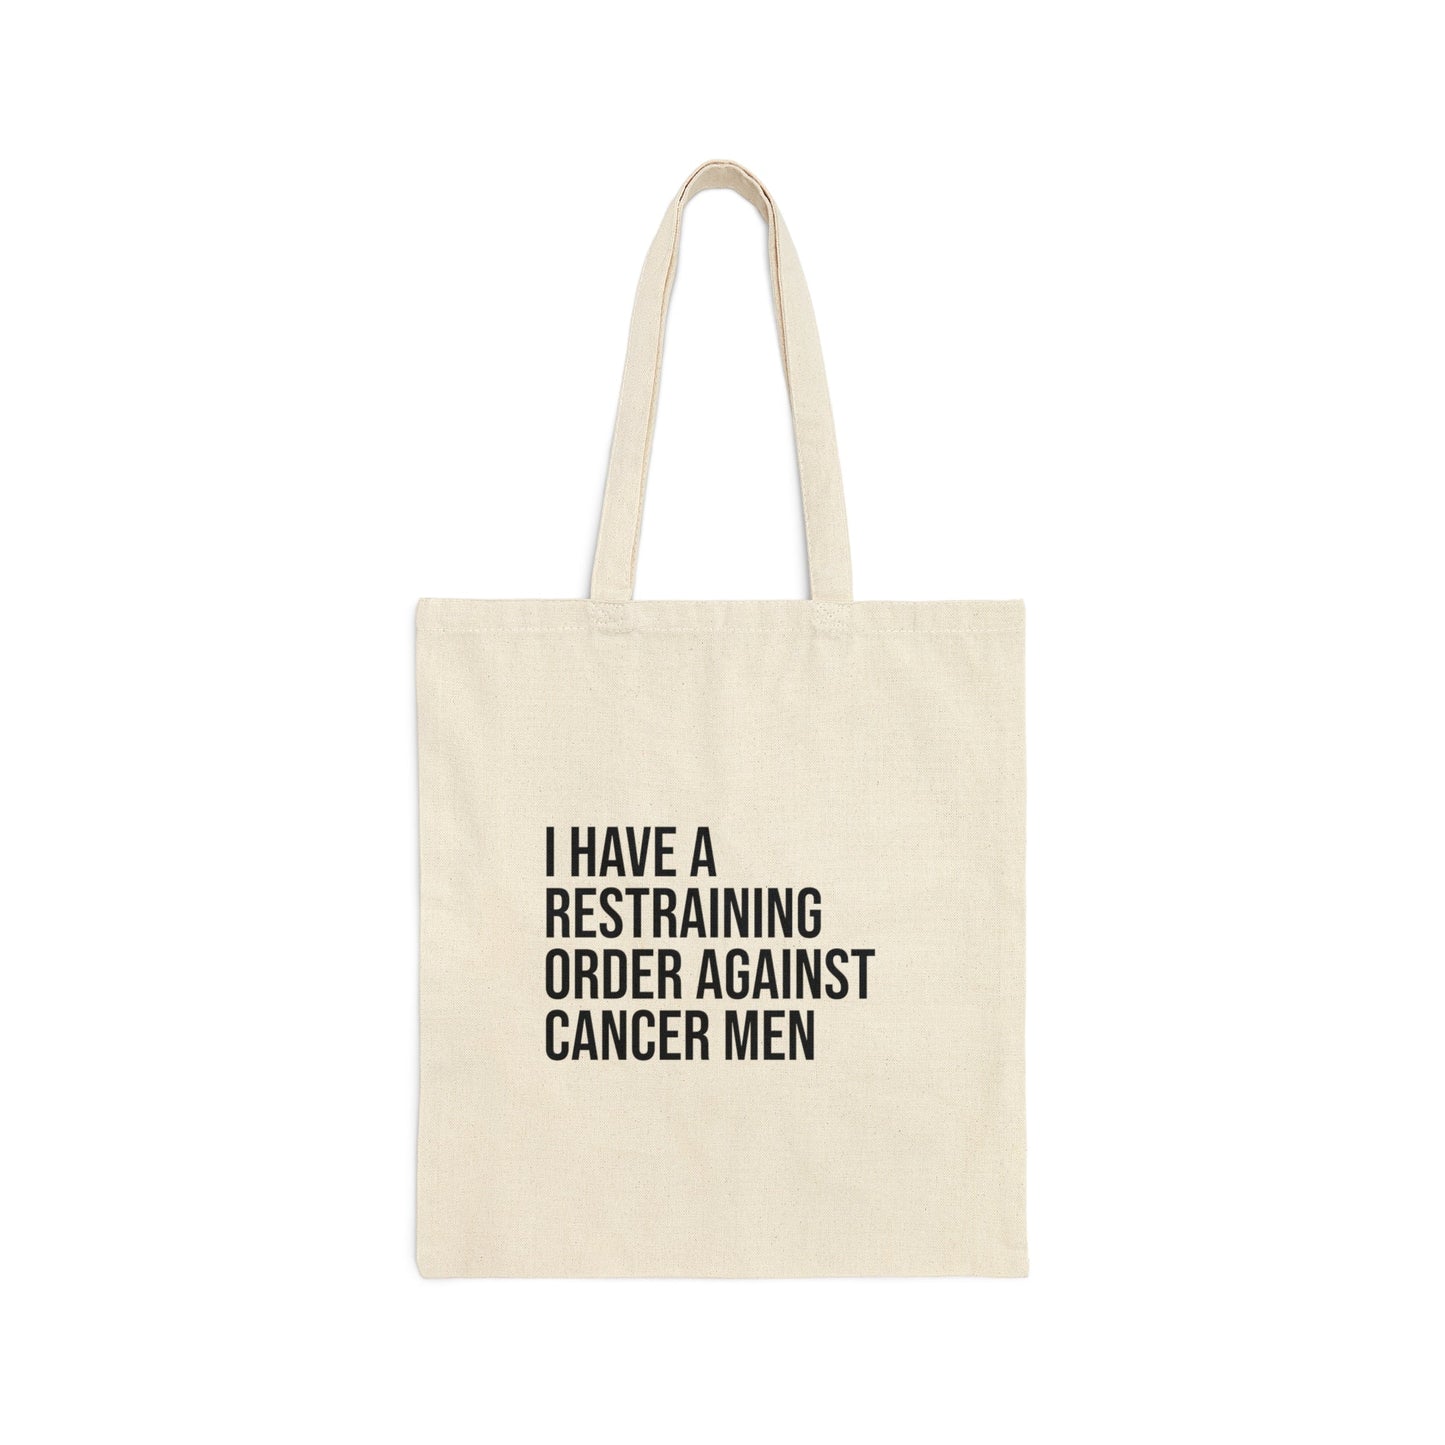 Restraining Order Against Cancer Men Tote Bag - Existential Quotes